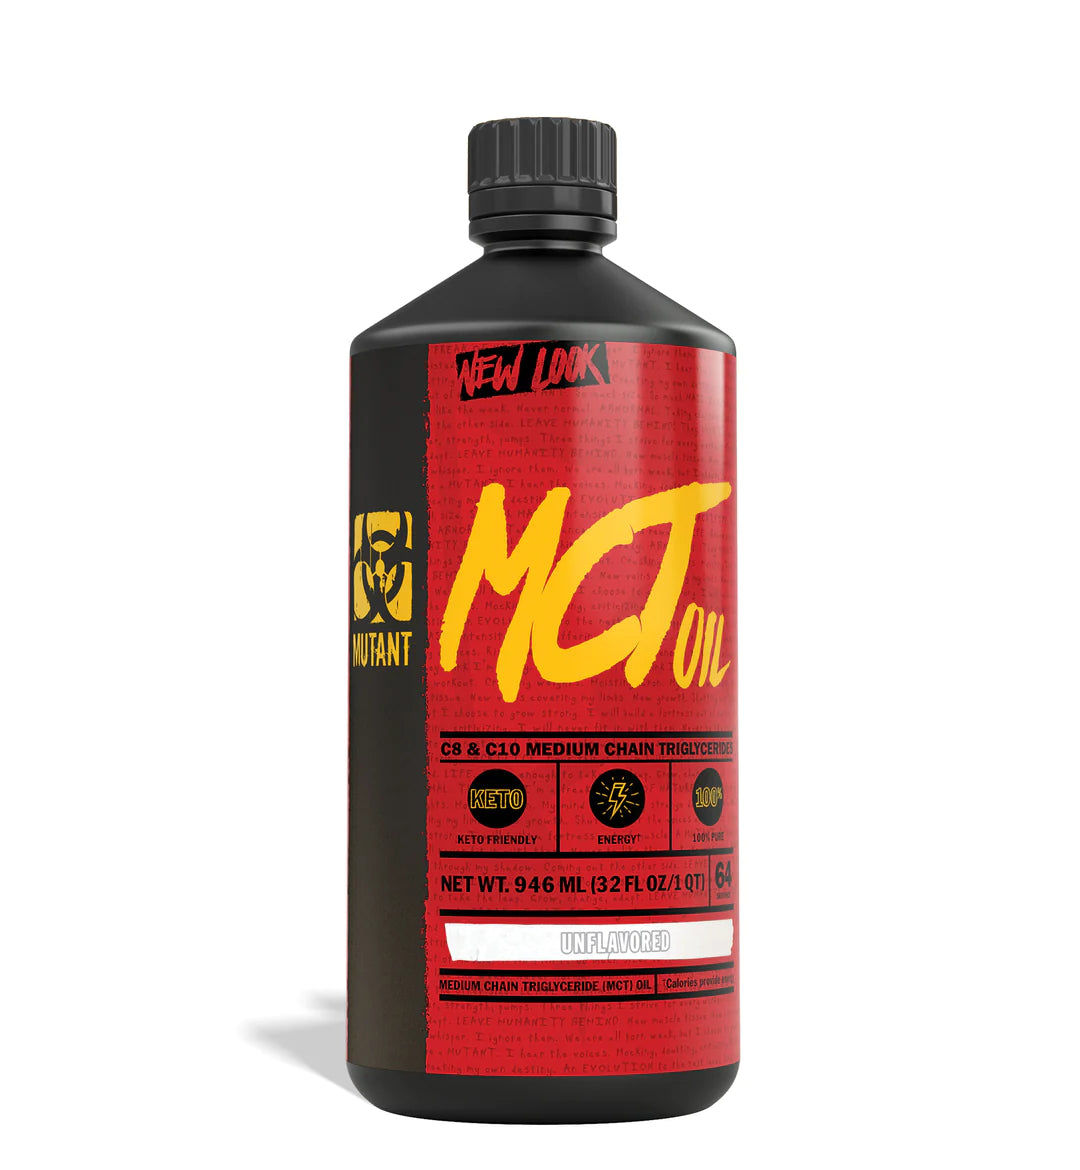 Mutant MCT Oil, 32oz - 64 Servings